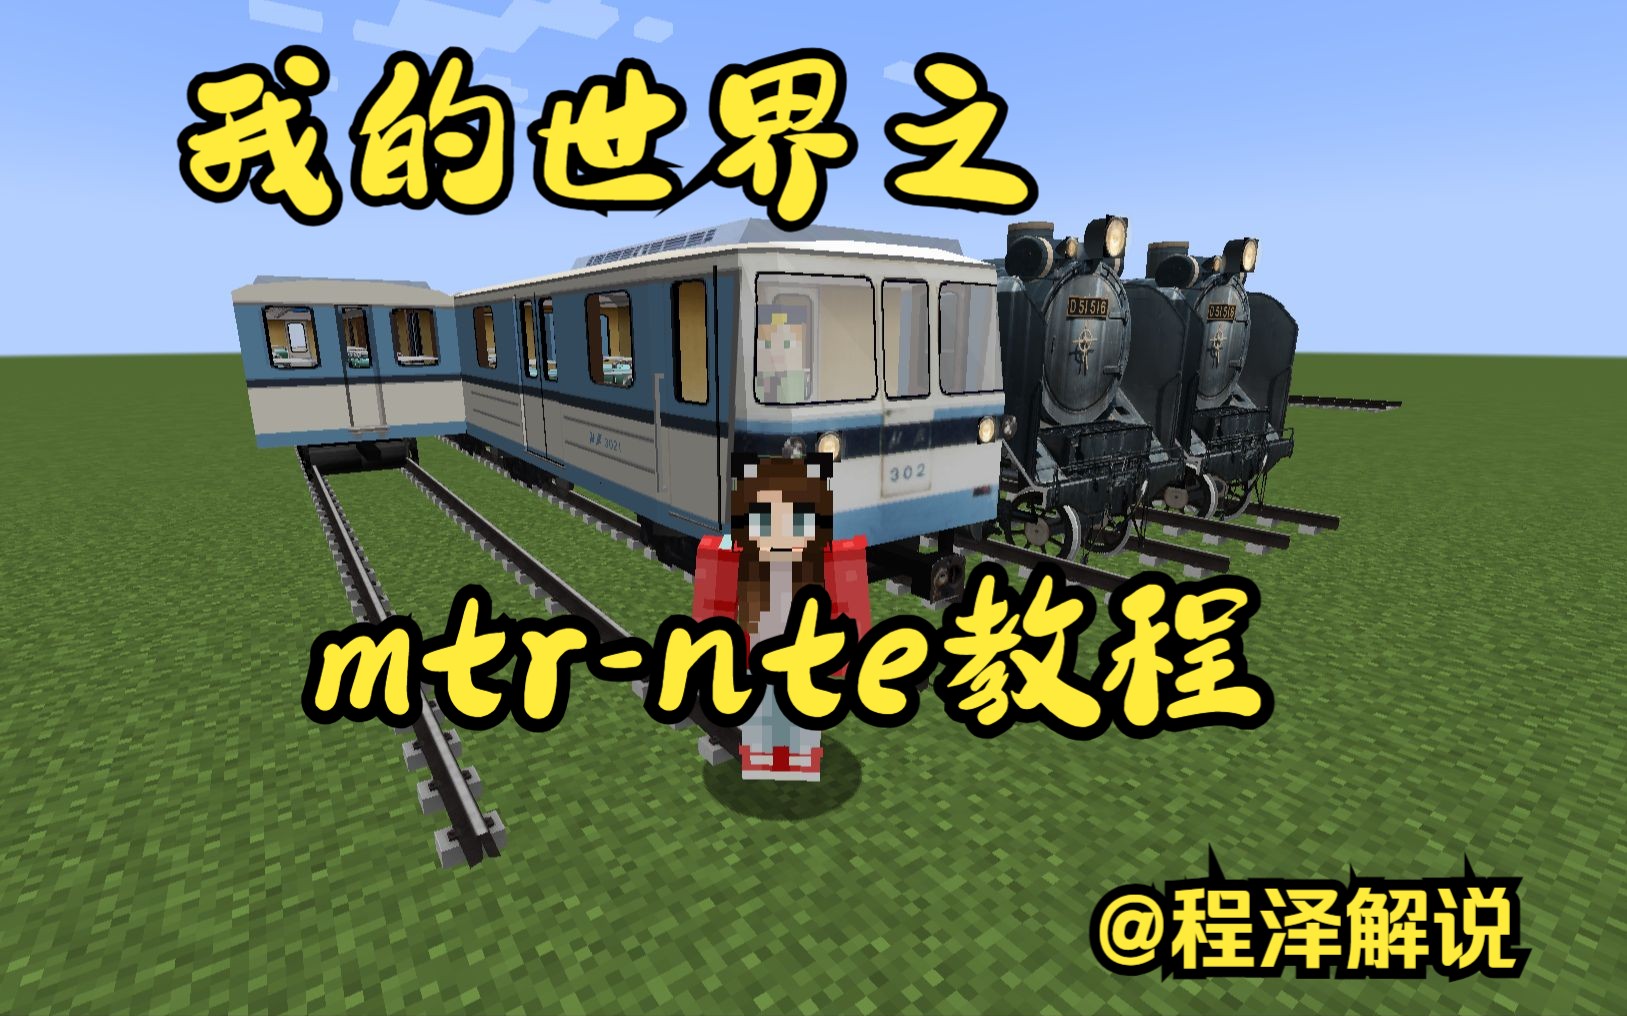 Minecraft rtm 真实火车mod系列追加【免费发布】